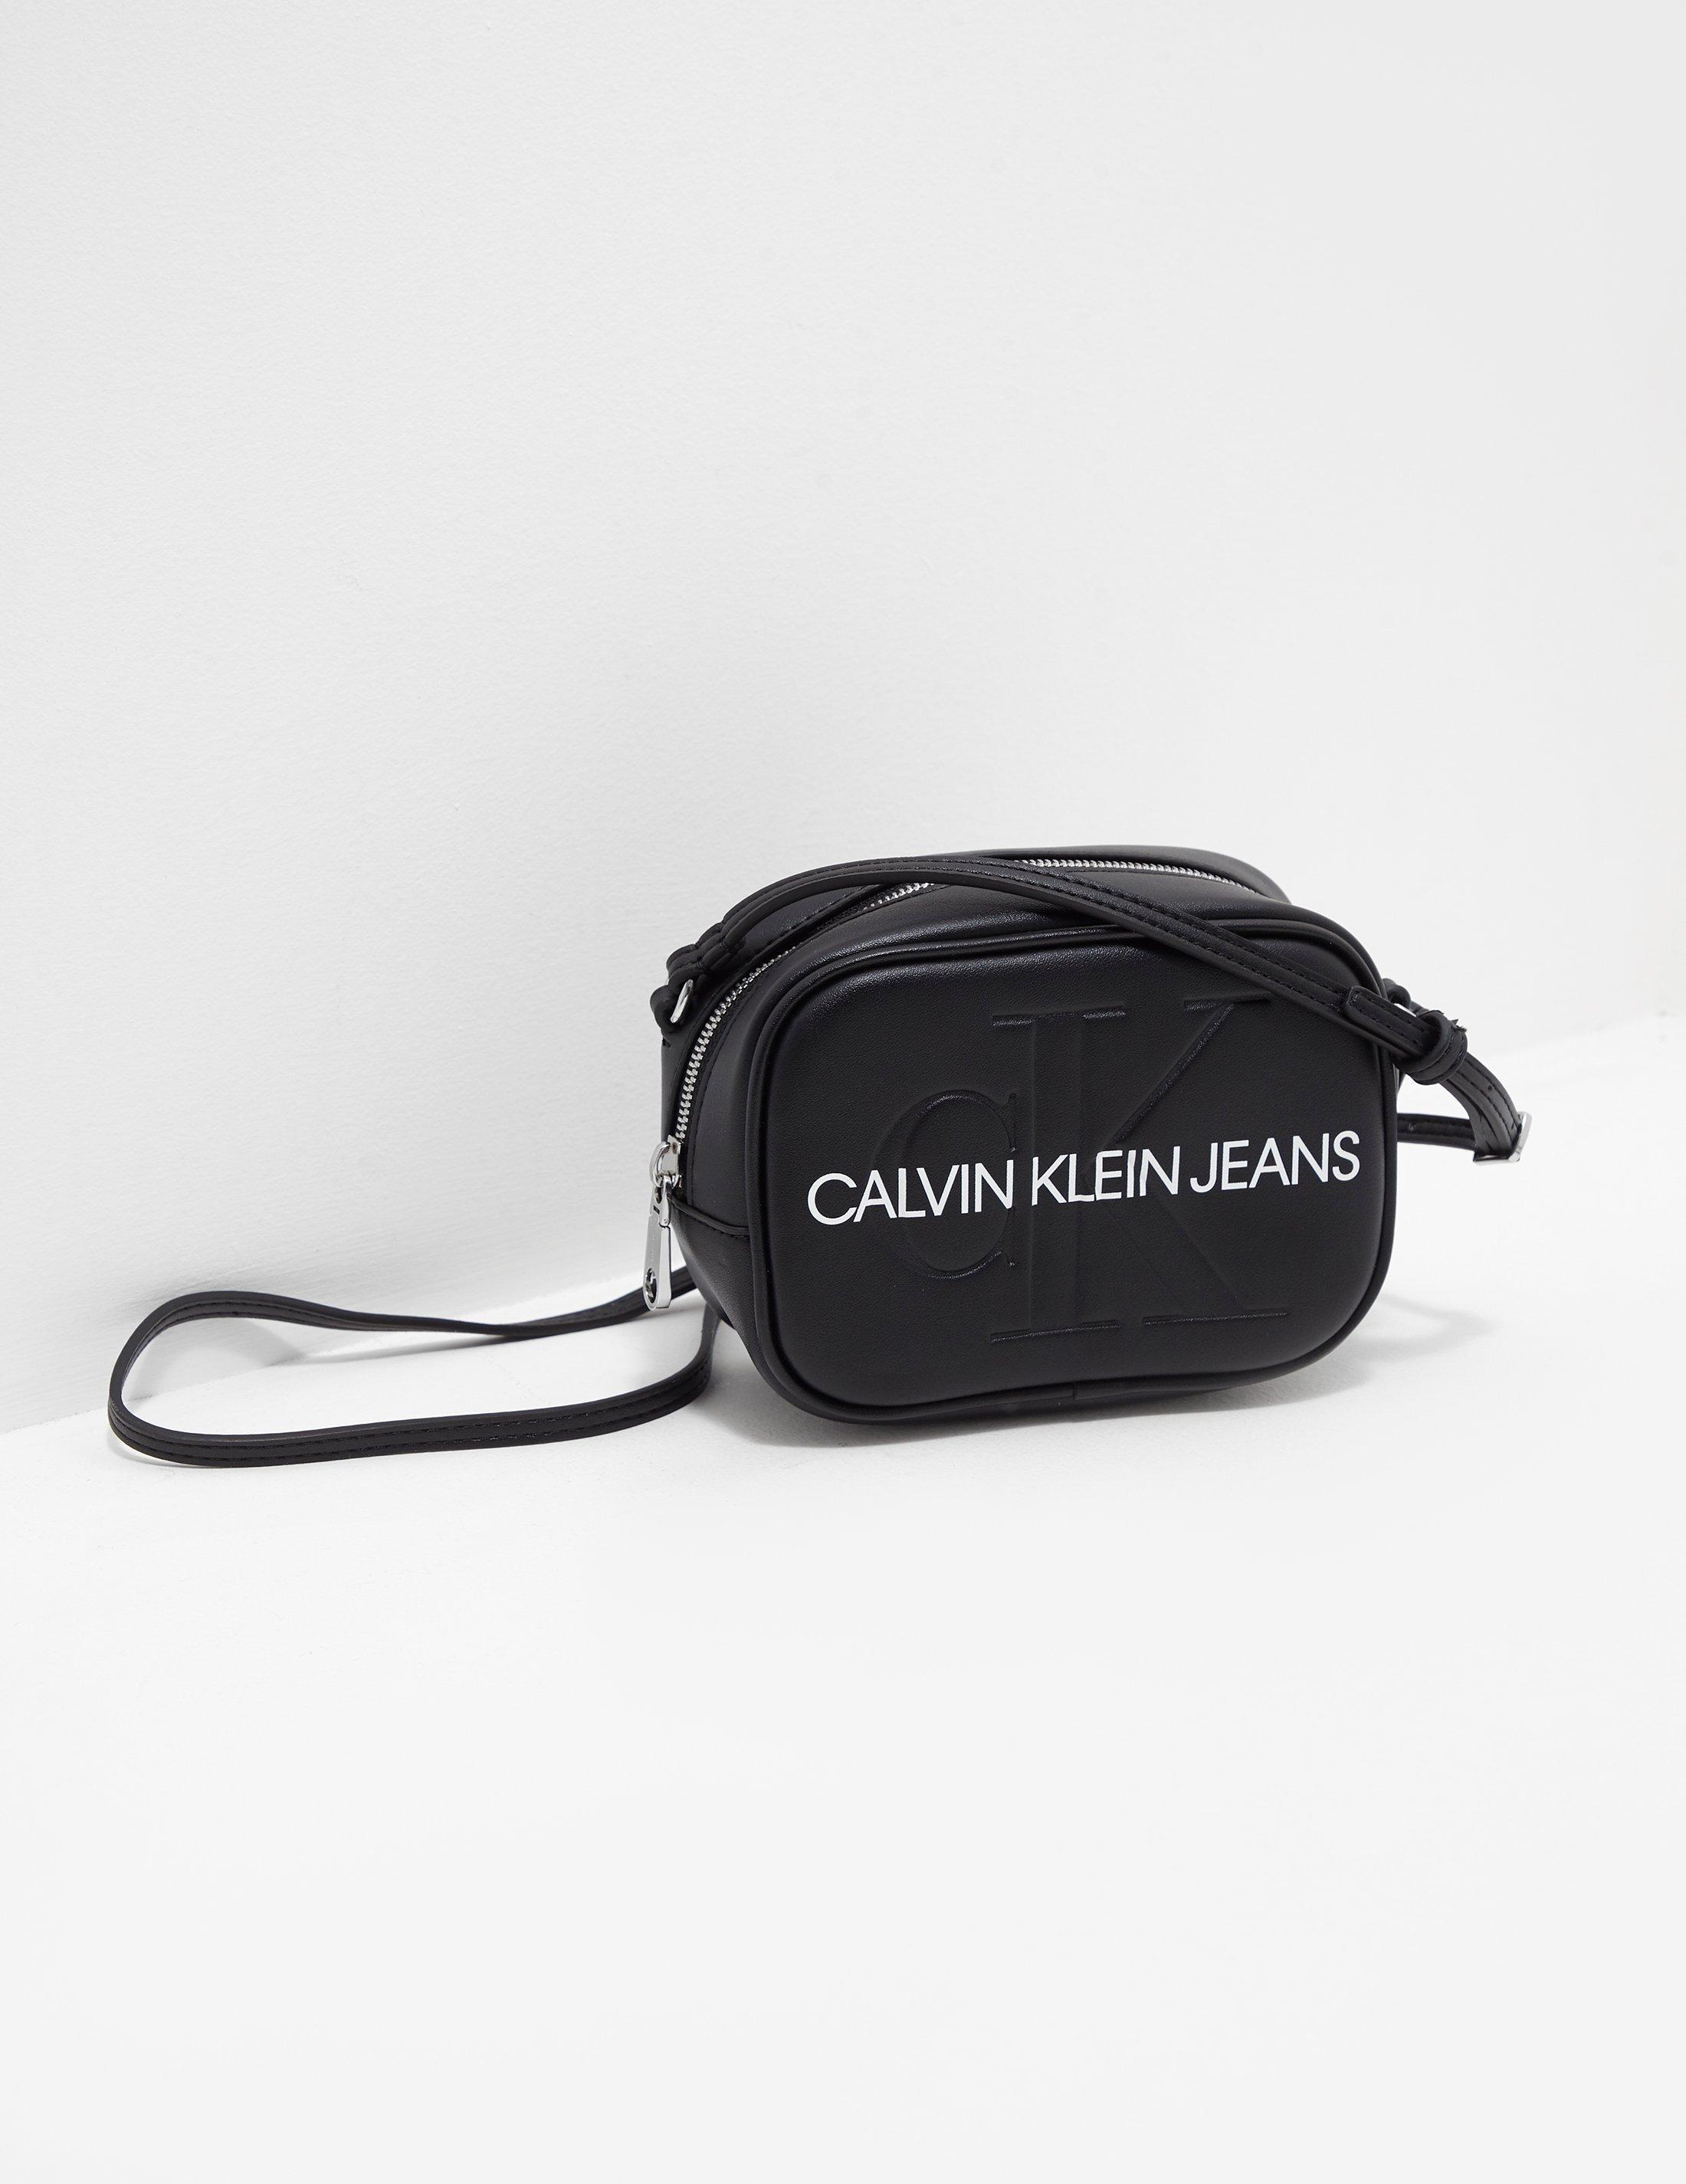 Calvin Klein Monogram Camera Bag in Black - Lyst